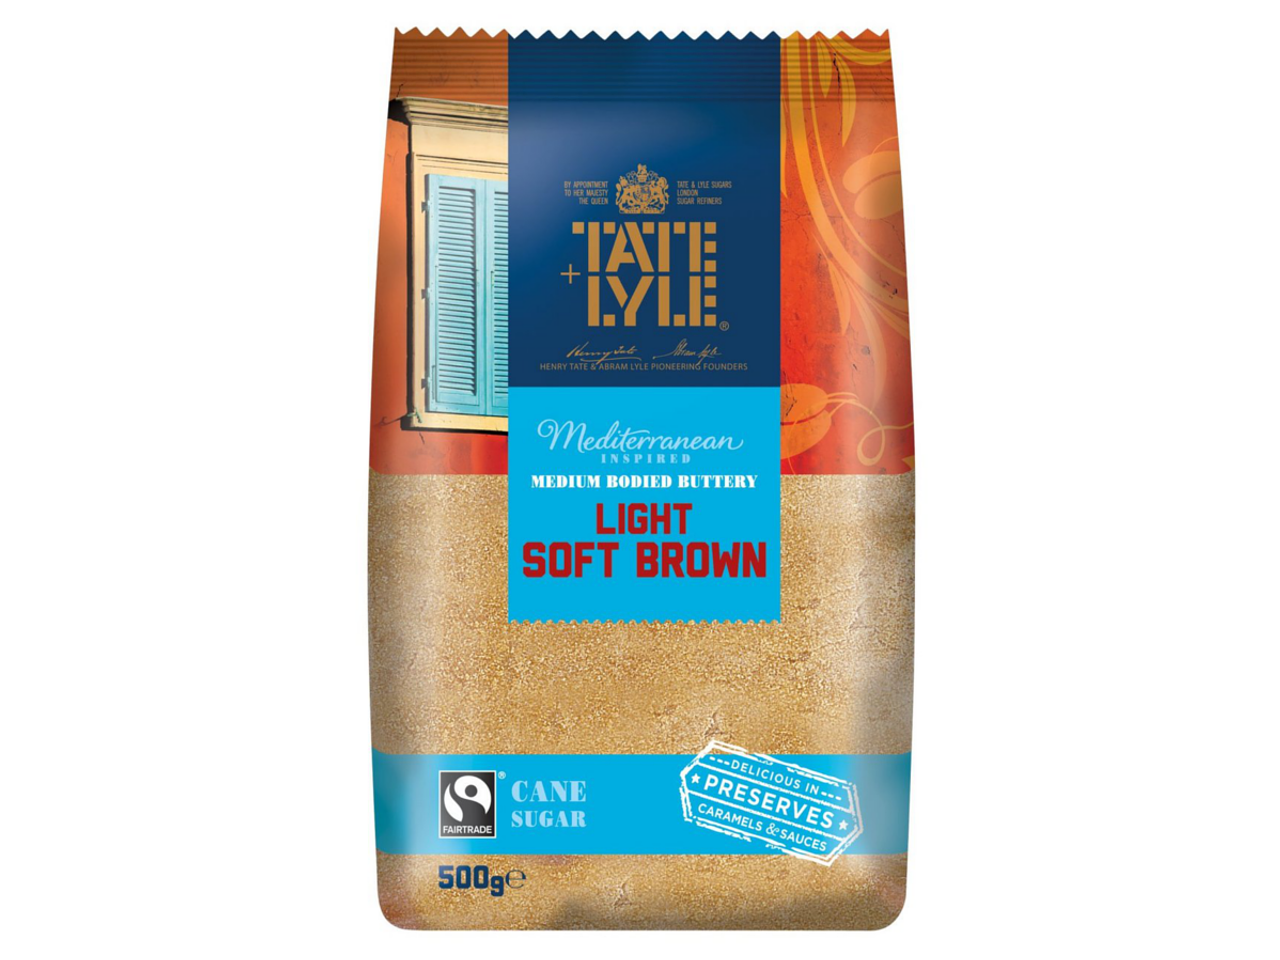 Tate & Lyle Mediterranean Inspired Light Soft Brown Cane Sugar 500g